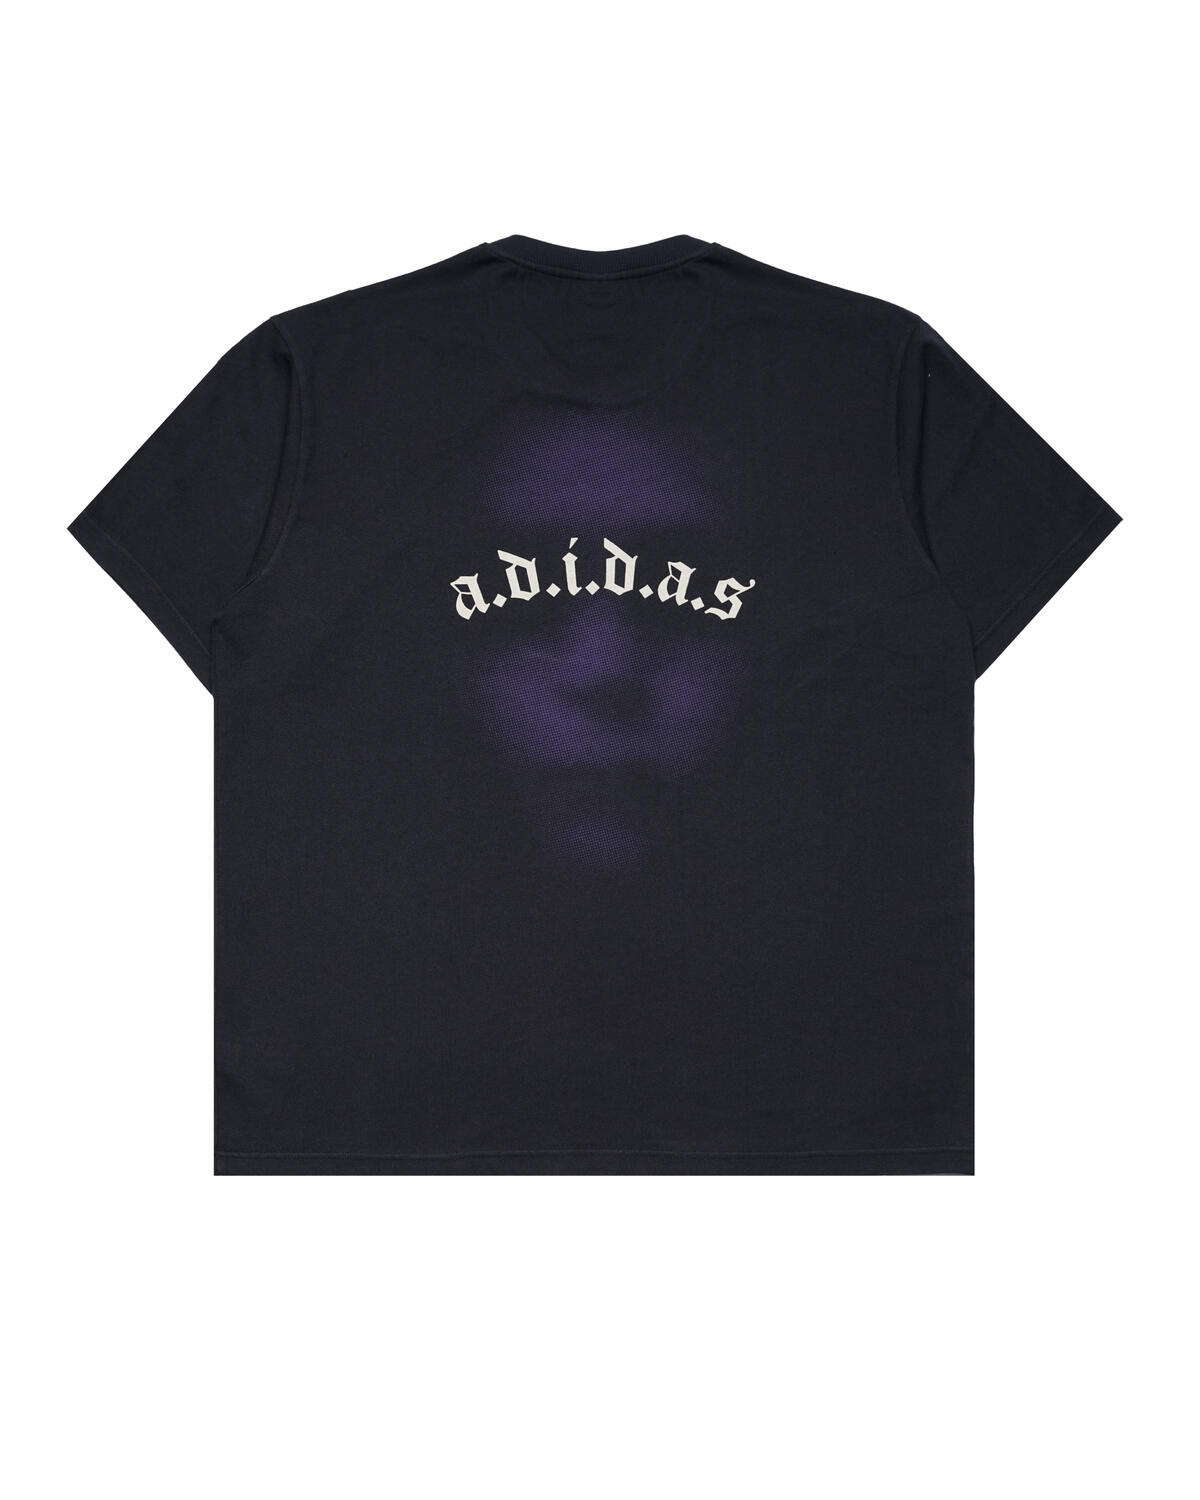 Adidas Originals x KORN GRAPHIC T-Shirt | IN9099 | AFEW STORE